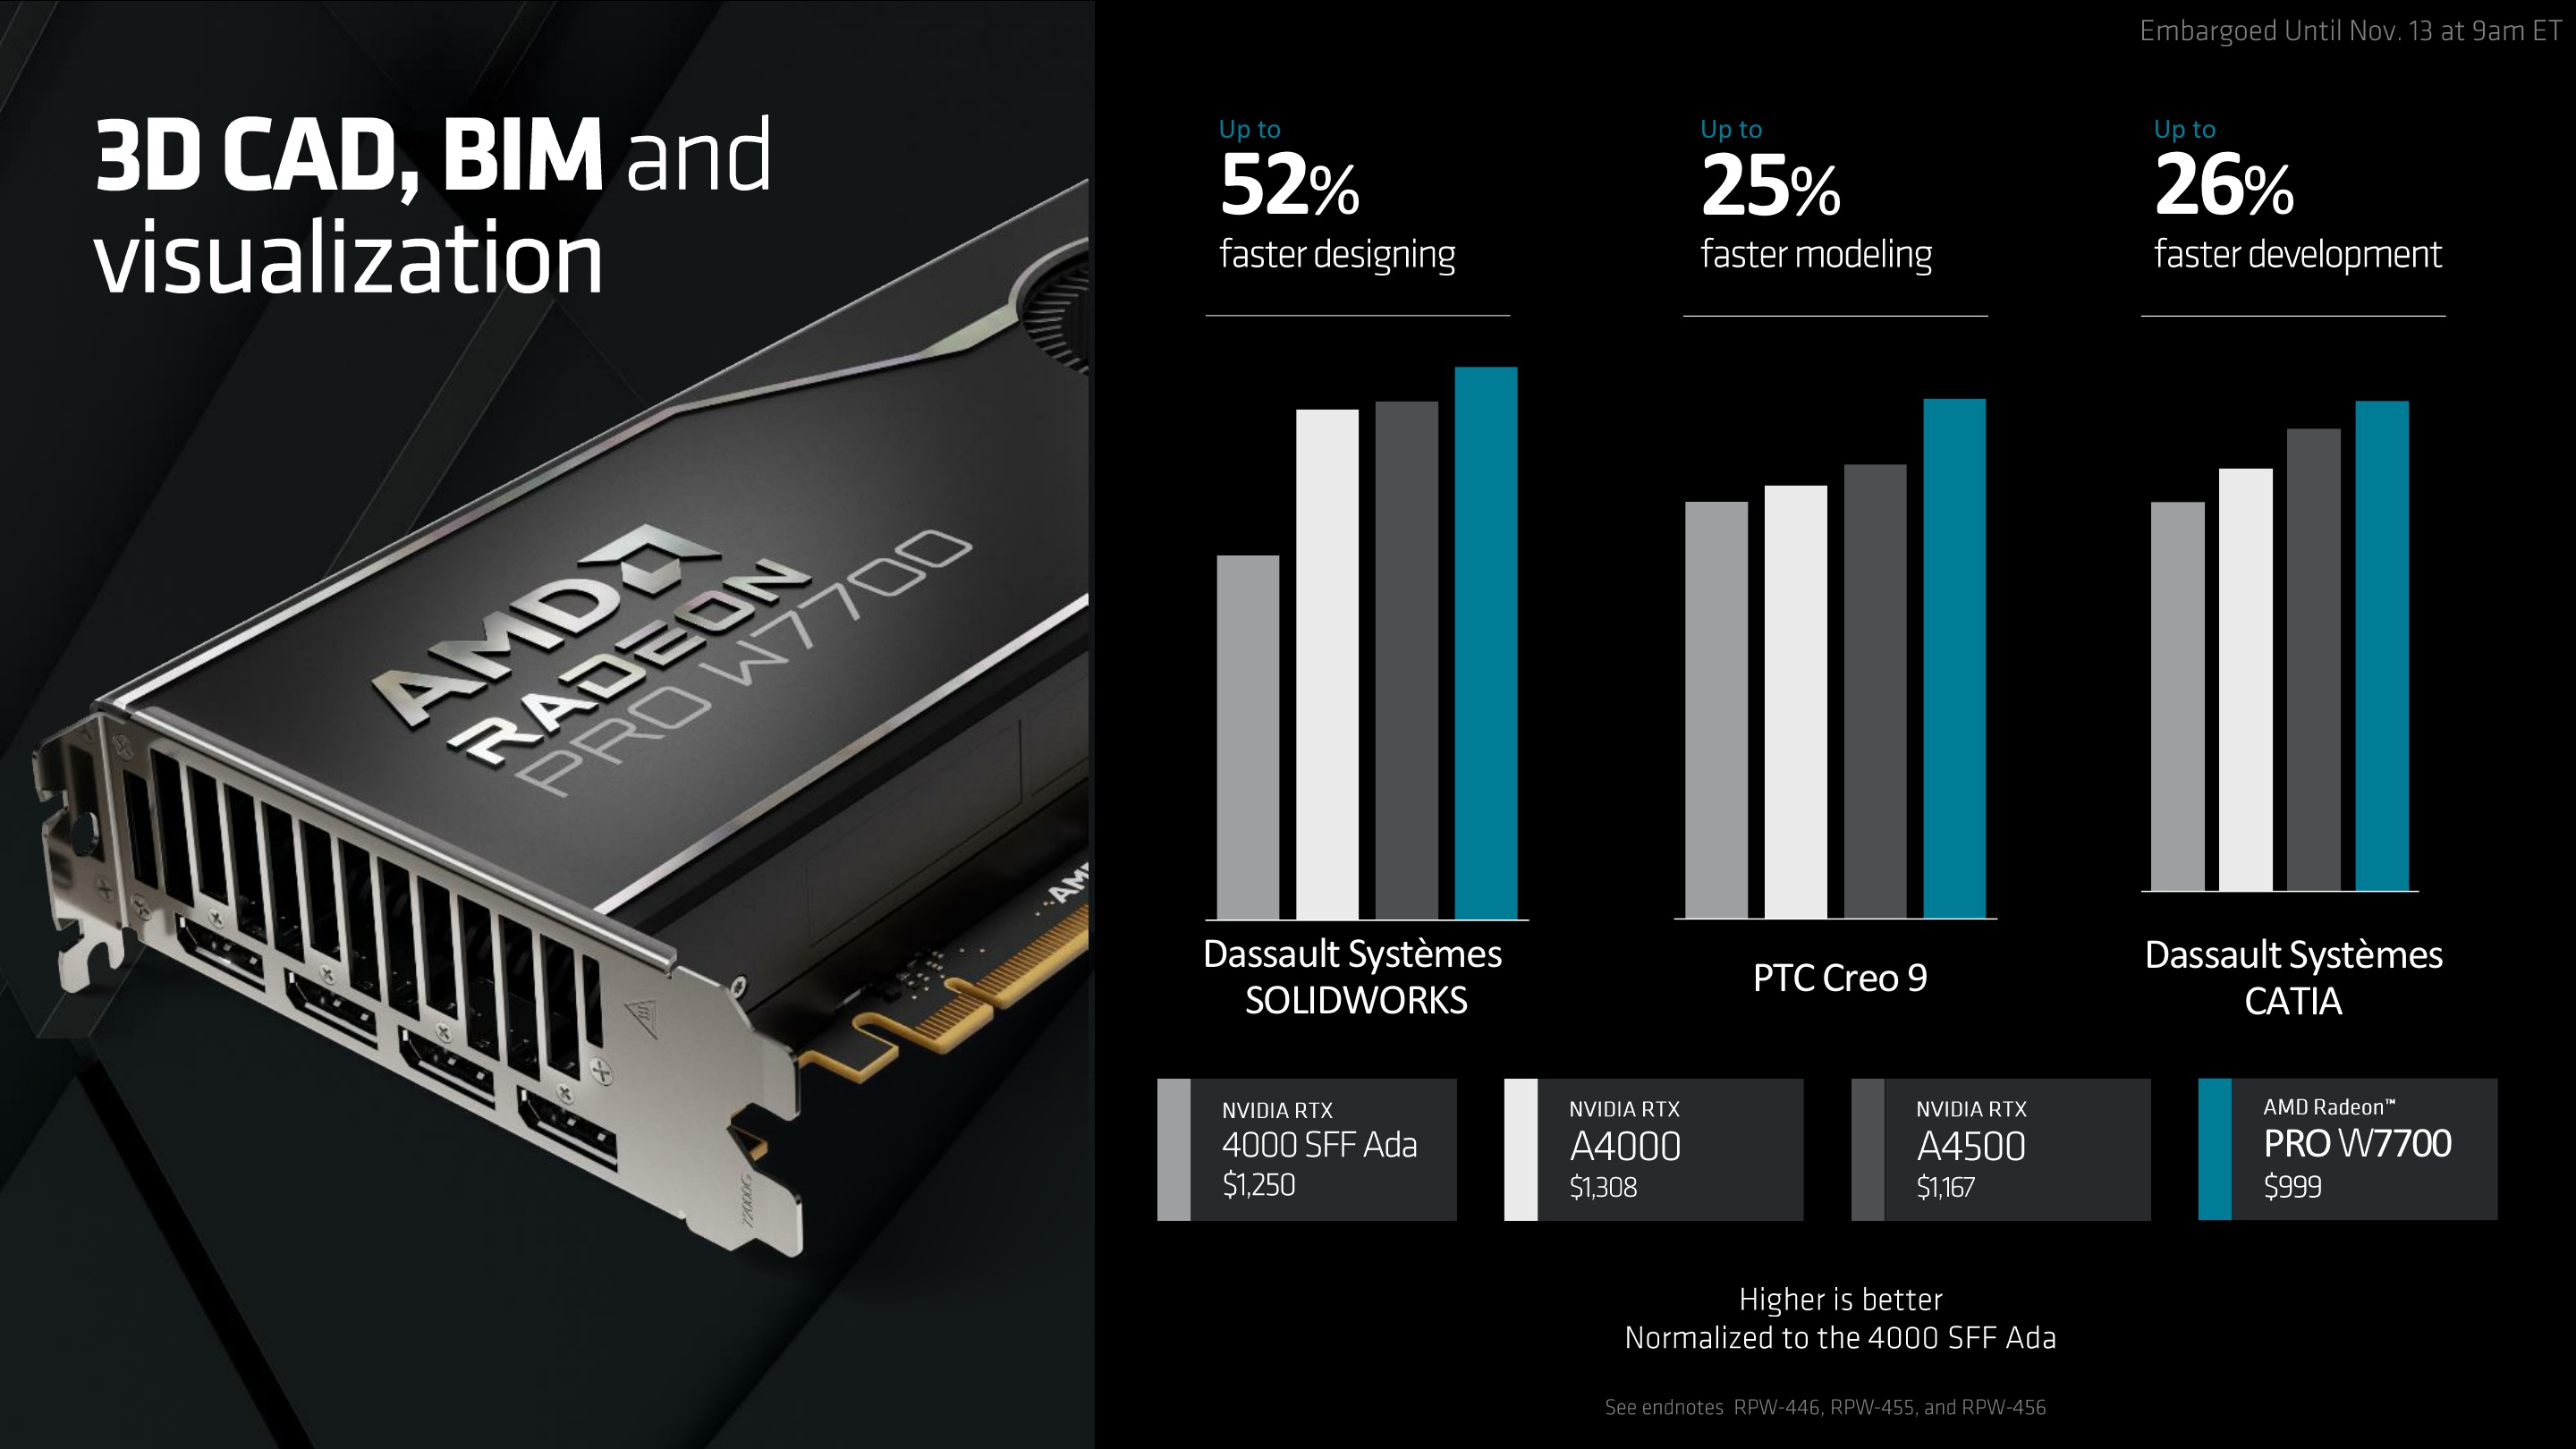 AMD Radeon PRO W7700 Press Deck - LEGAL-BRAND APPROVED_FINAL_27.jpg